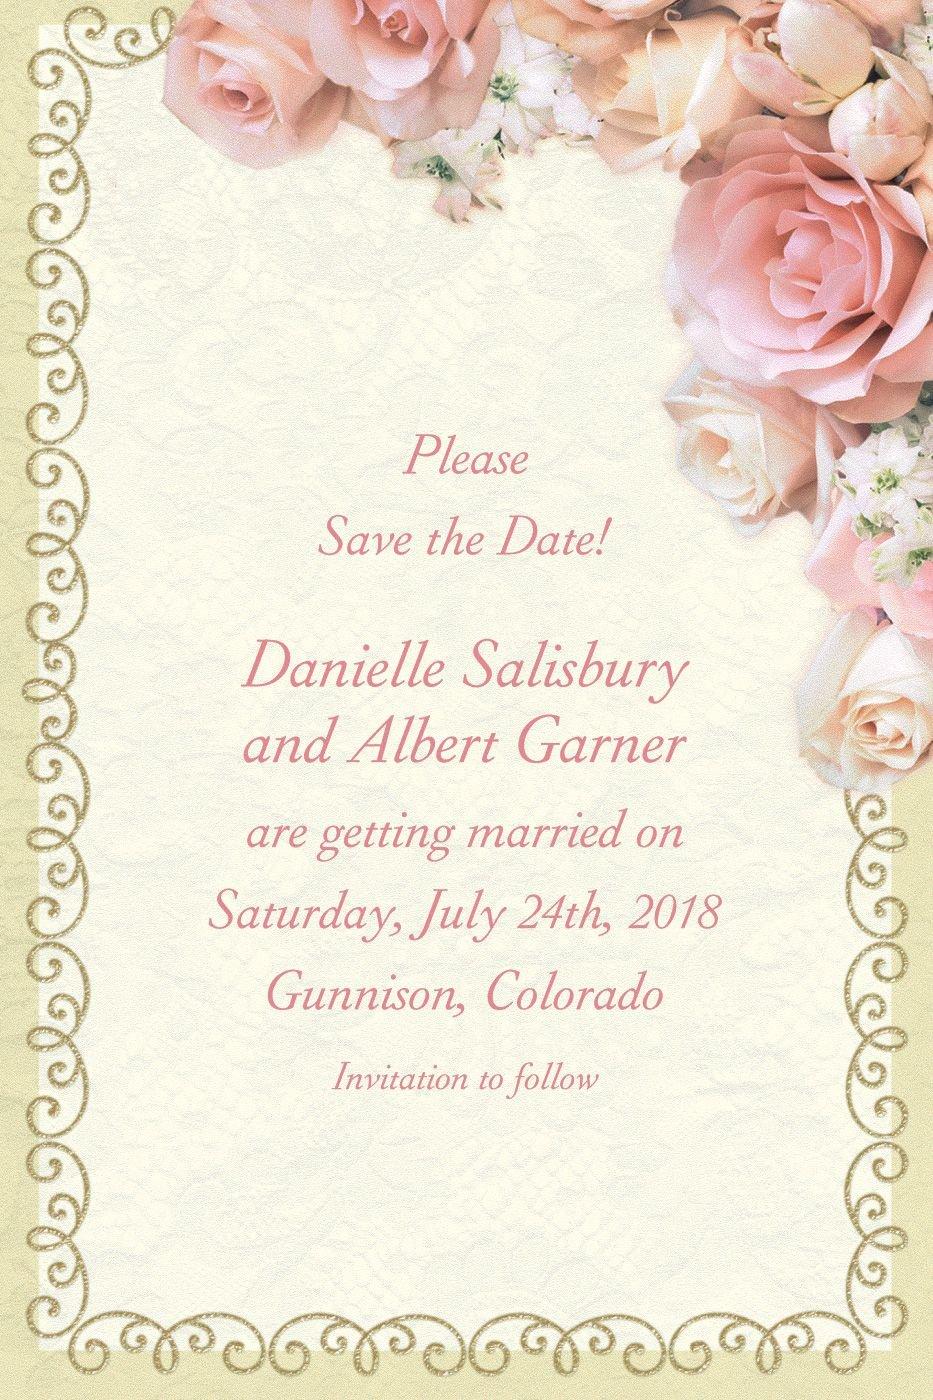 Custom Dazzling Bouquet Bridal Shower Invitations